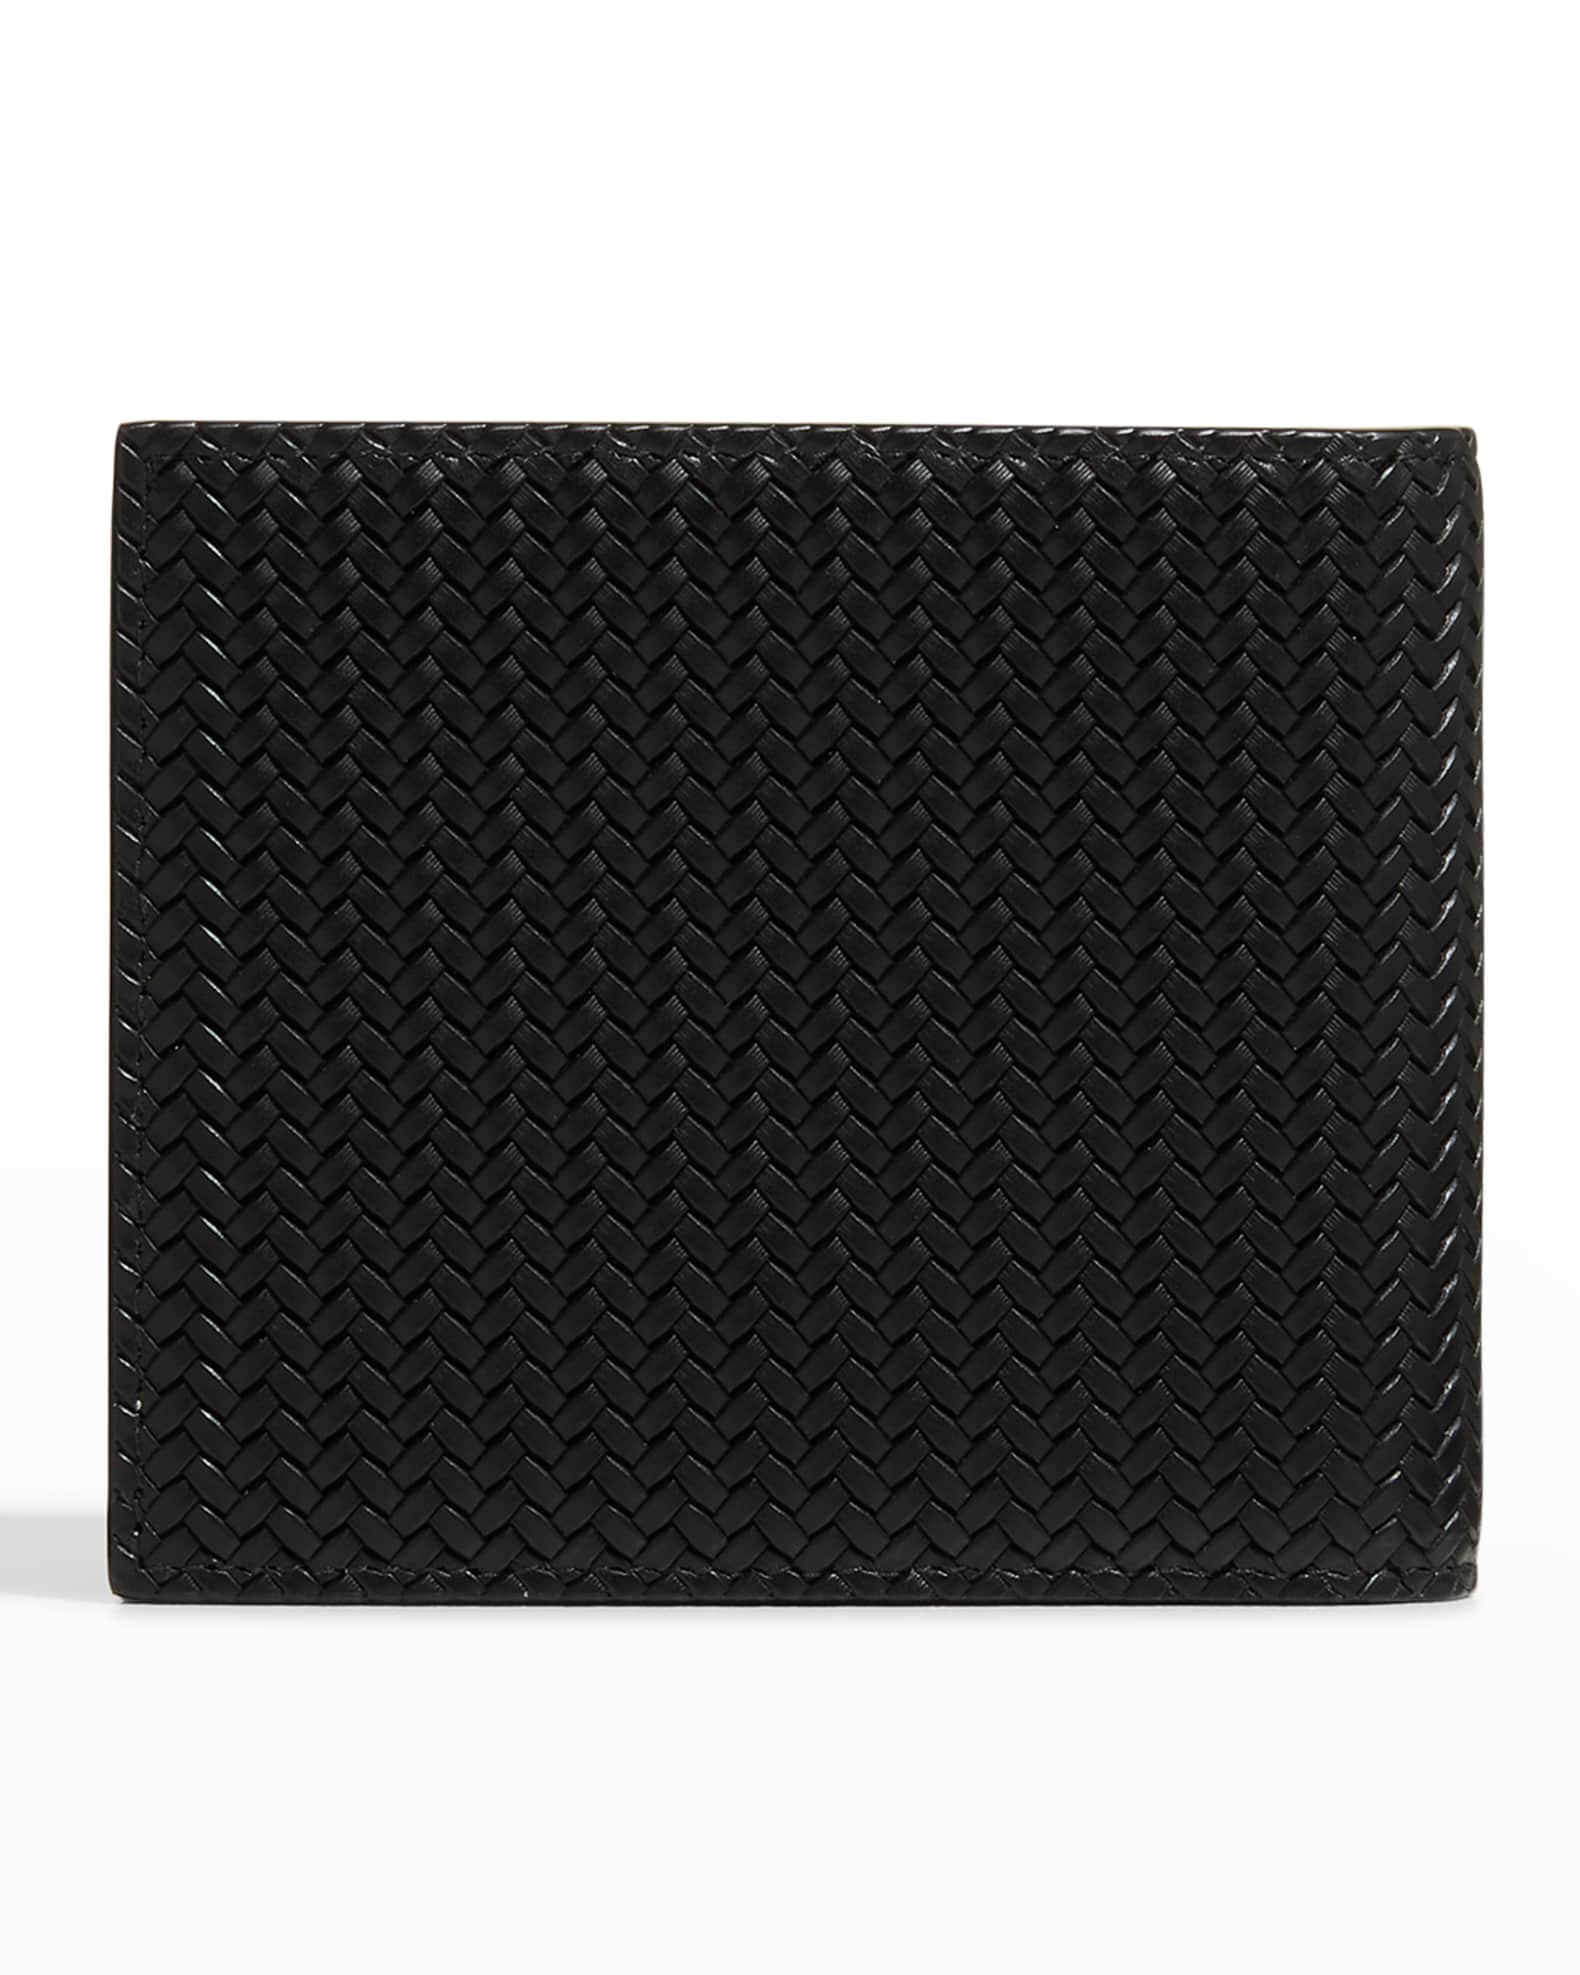 Giorgio Armani Men's Woven Leather Bifold Wallet | Neiman Marcus